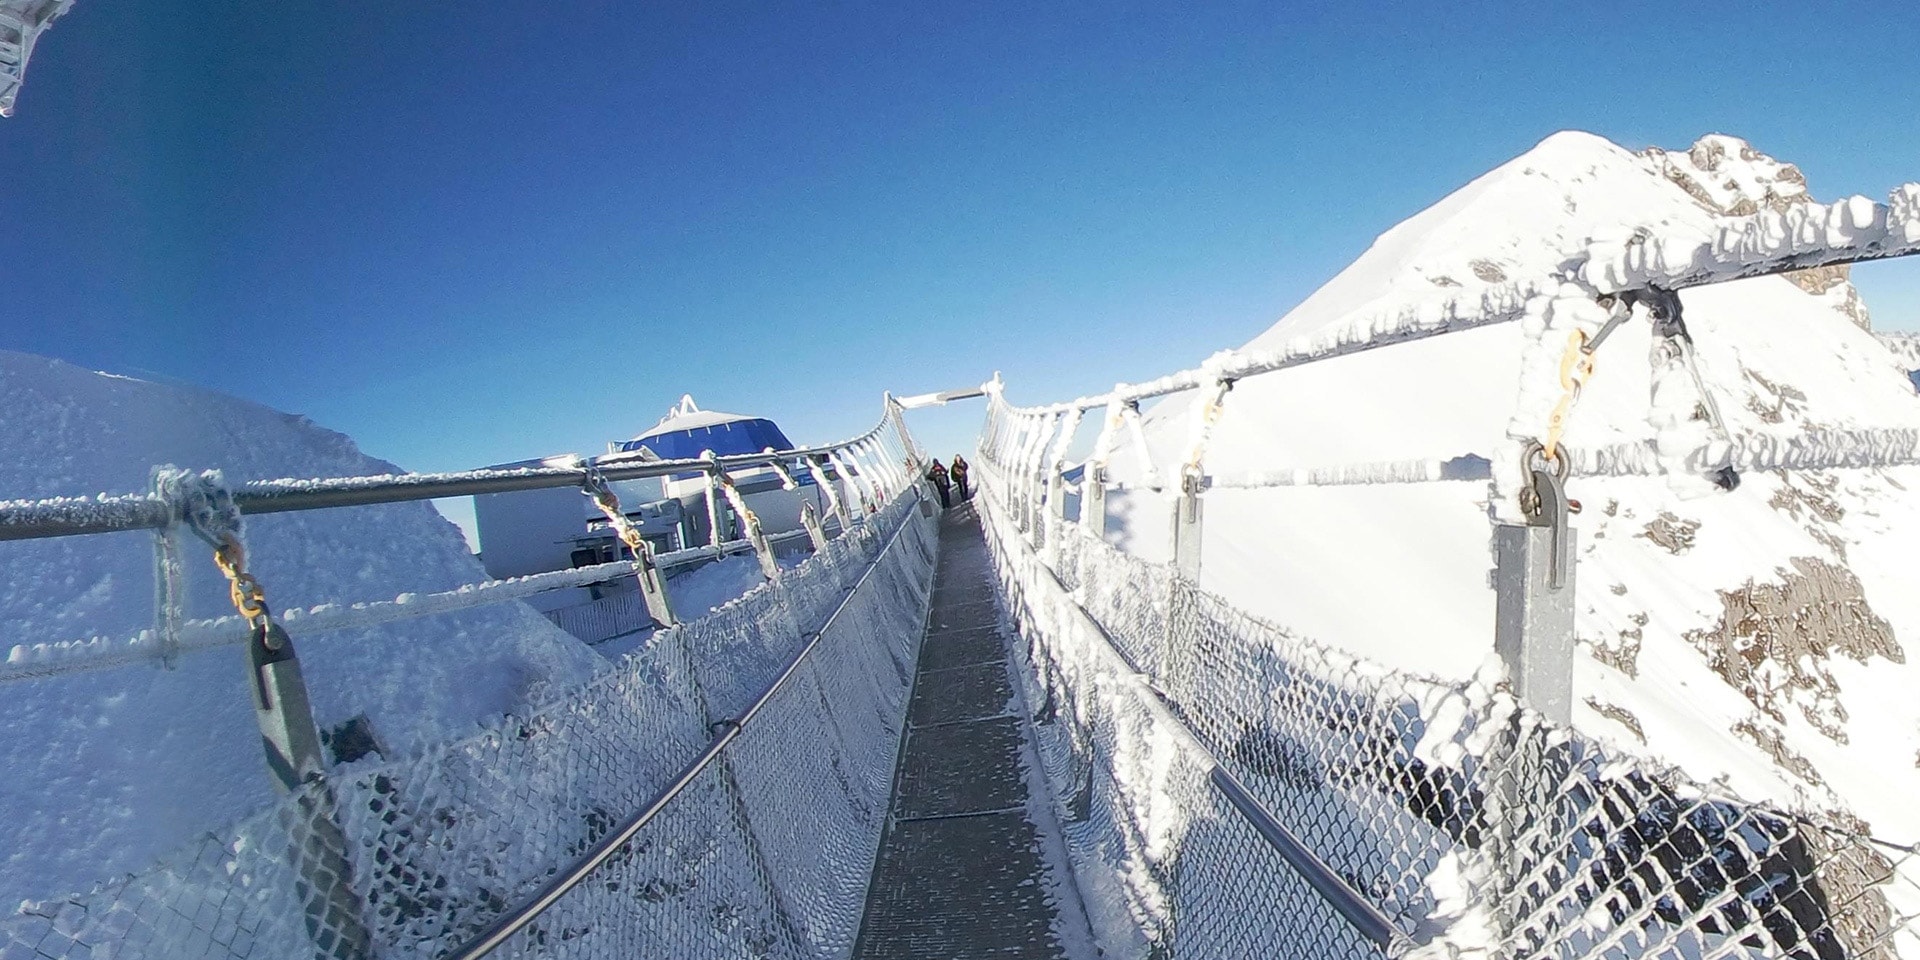 360 degree image of a bridge in Switzerland